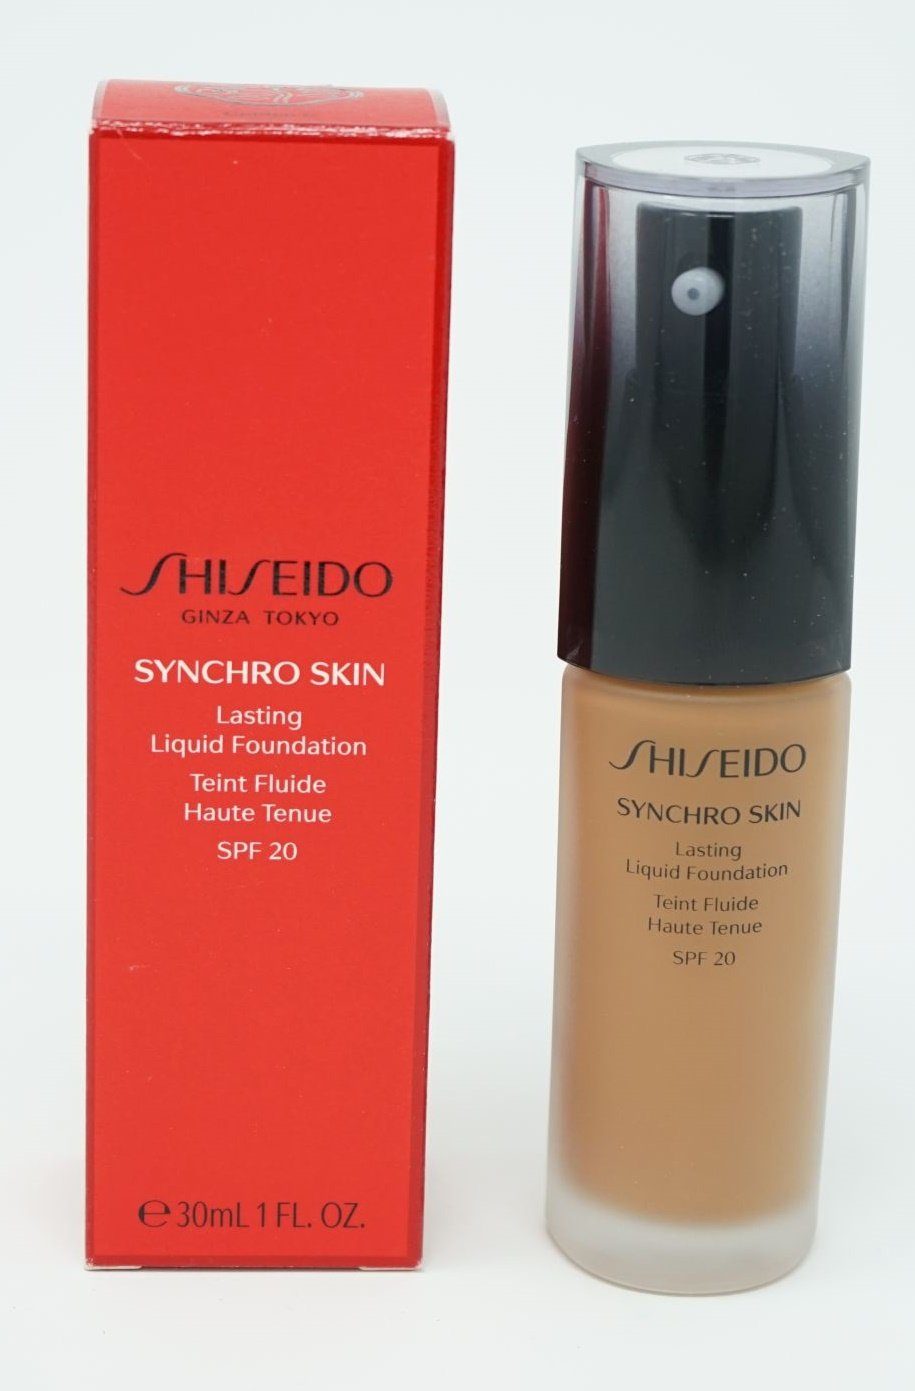 Skin Golden 6 Shiseido SHISEIDO Sychro Lasting Körperspray SPF20 Ginza Tokyo Foundation